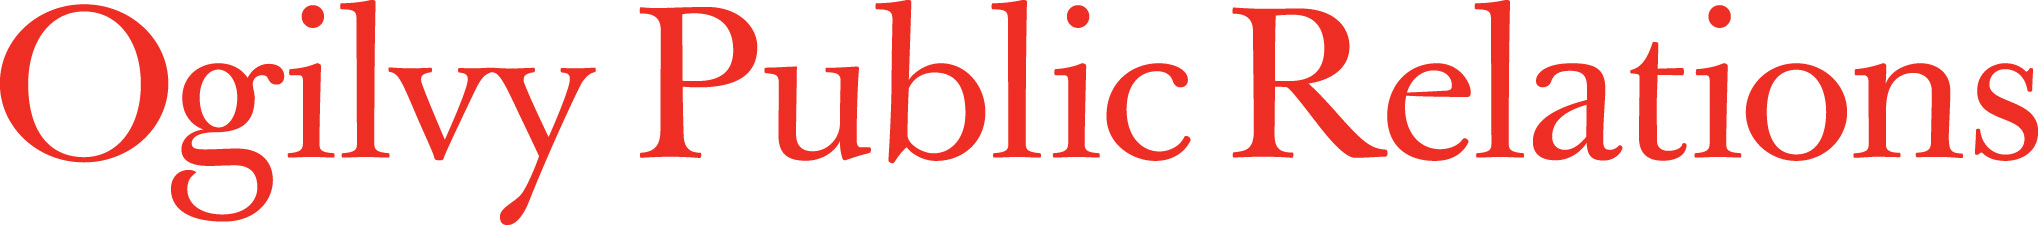  Leading Digital PR Business Logo: Ogilvy Public Relations